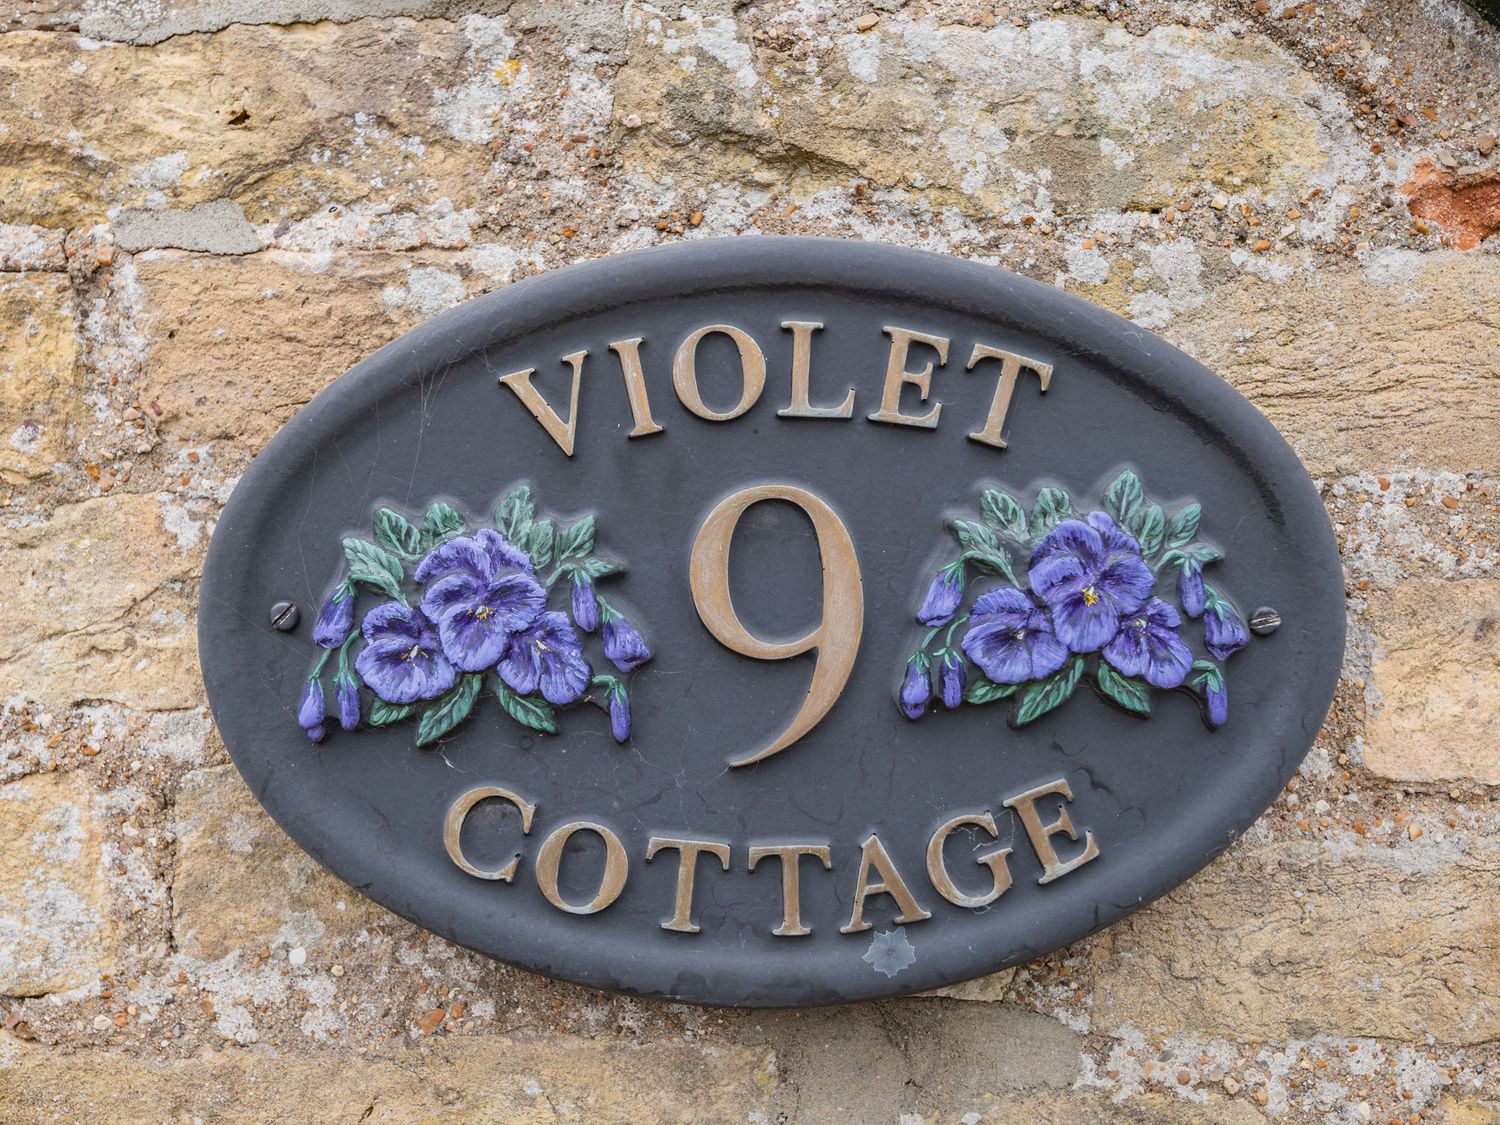 Violet Cottage, East Anglia